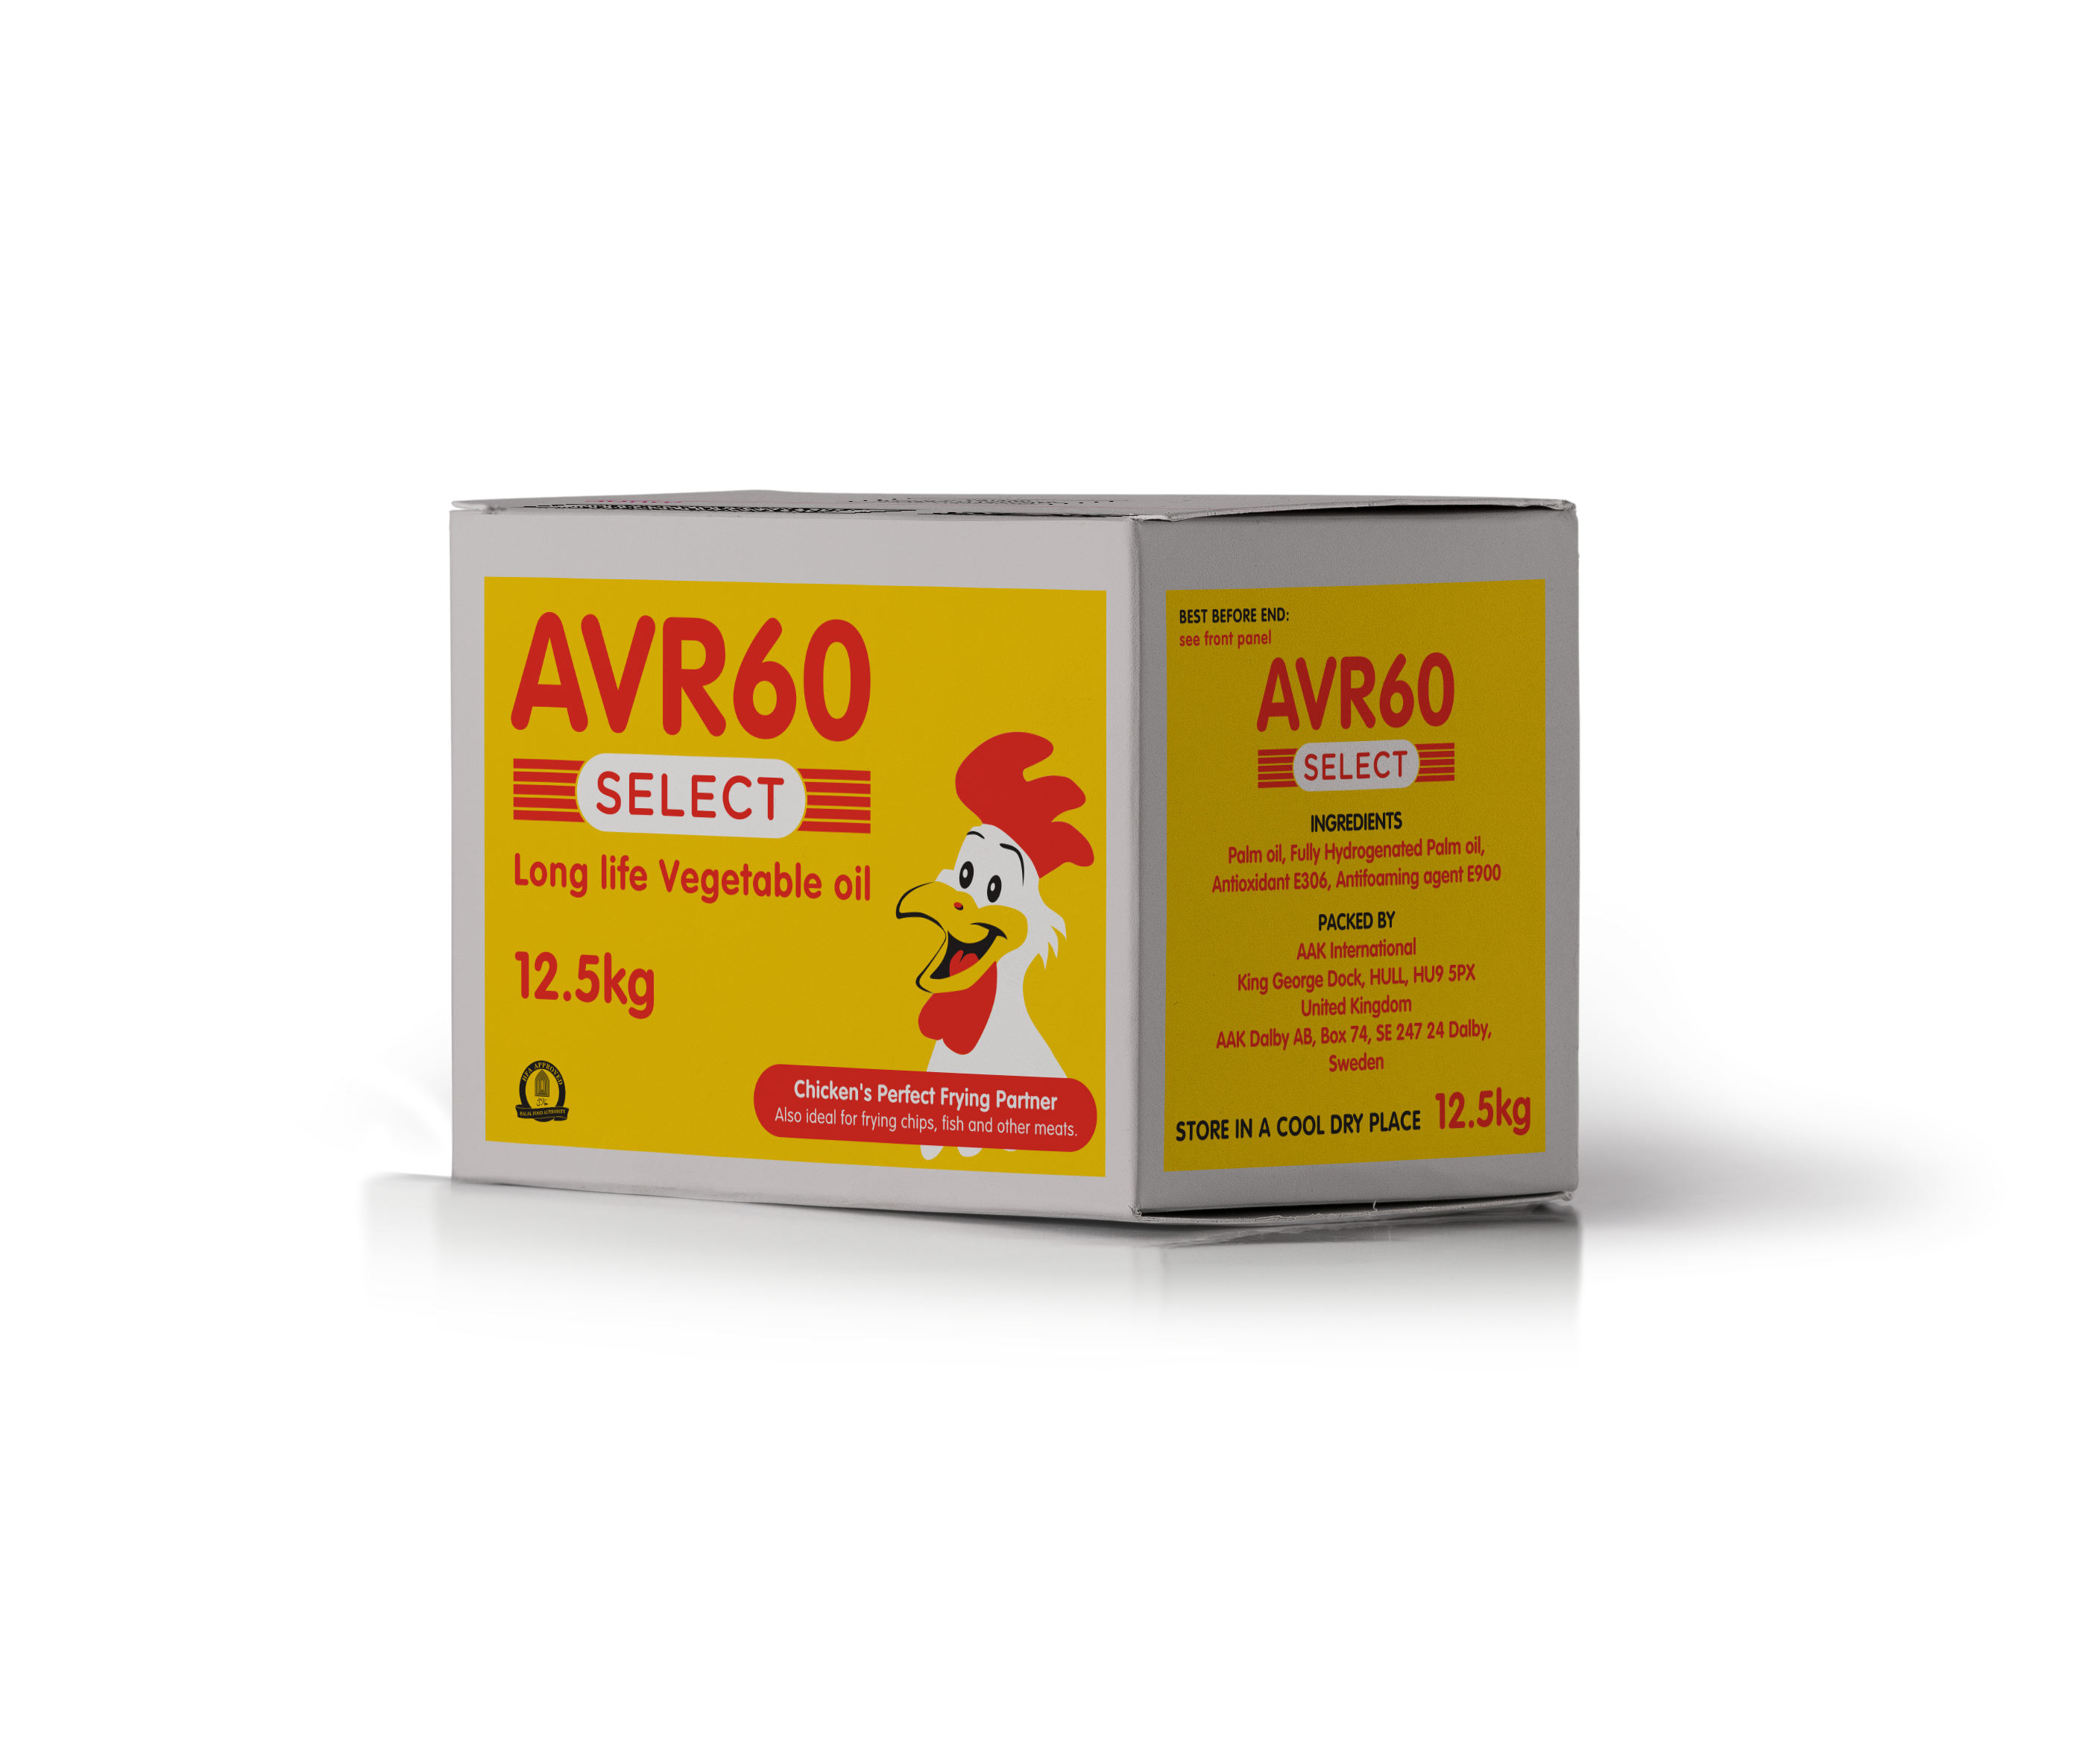 AVR60 Select 12 5kg Box mockup